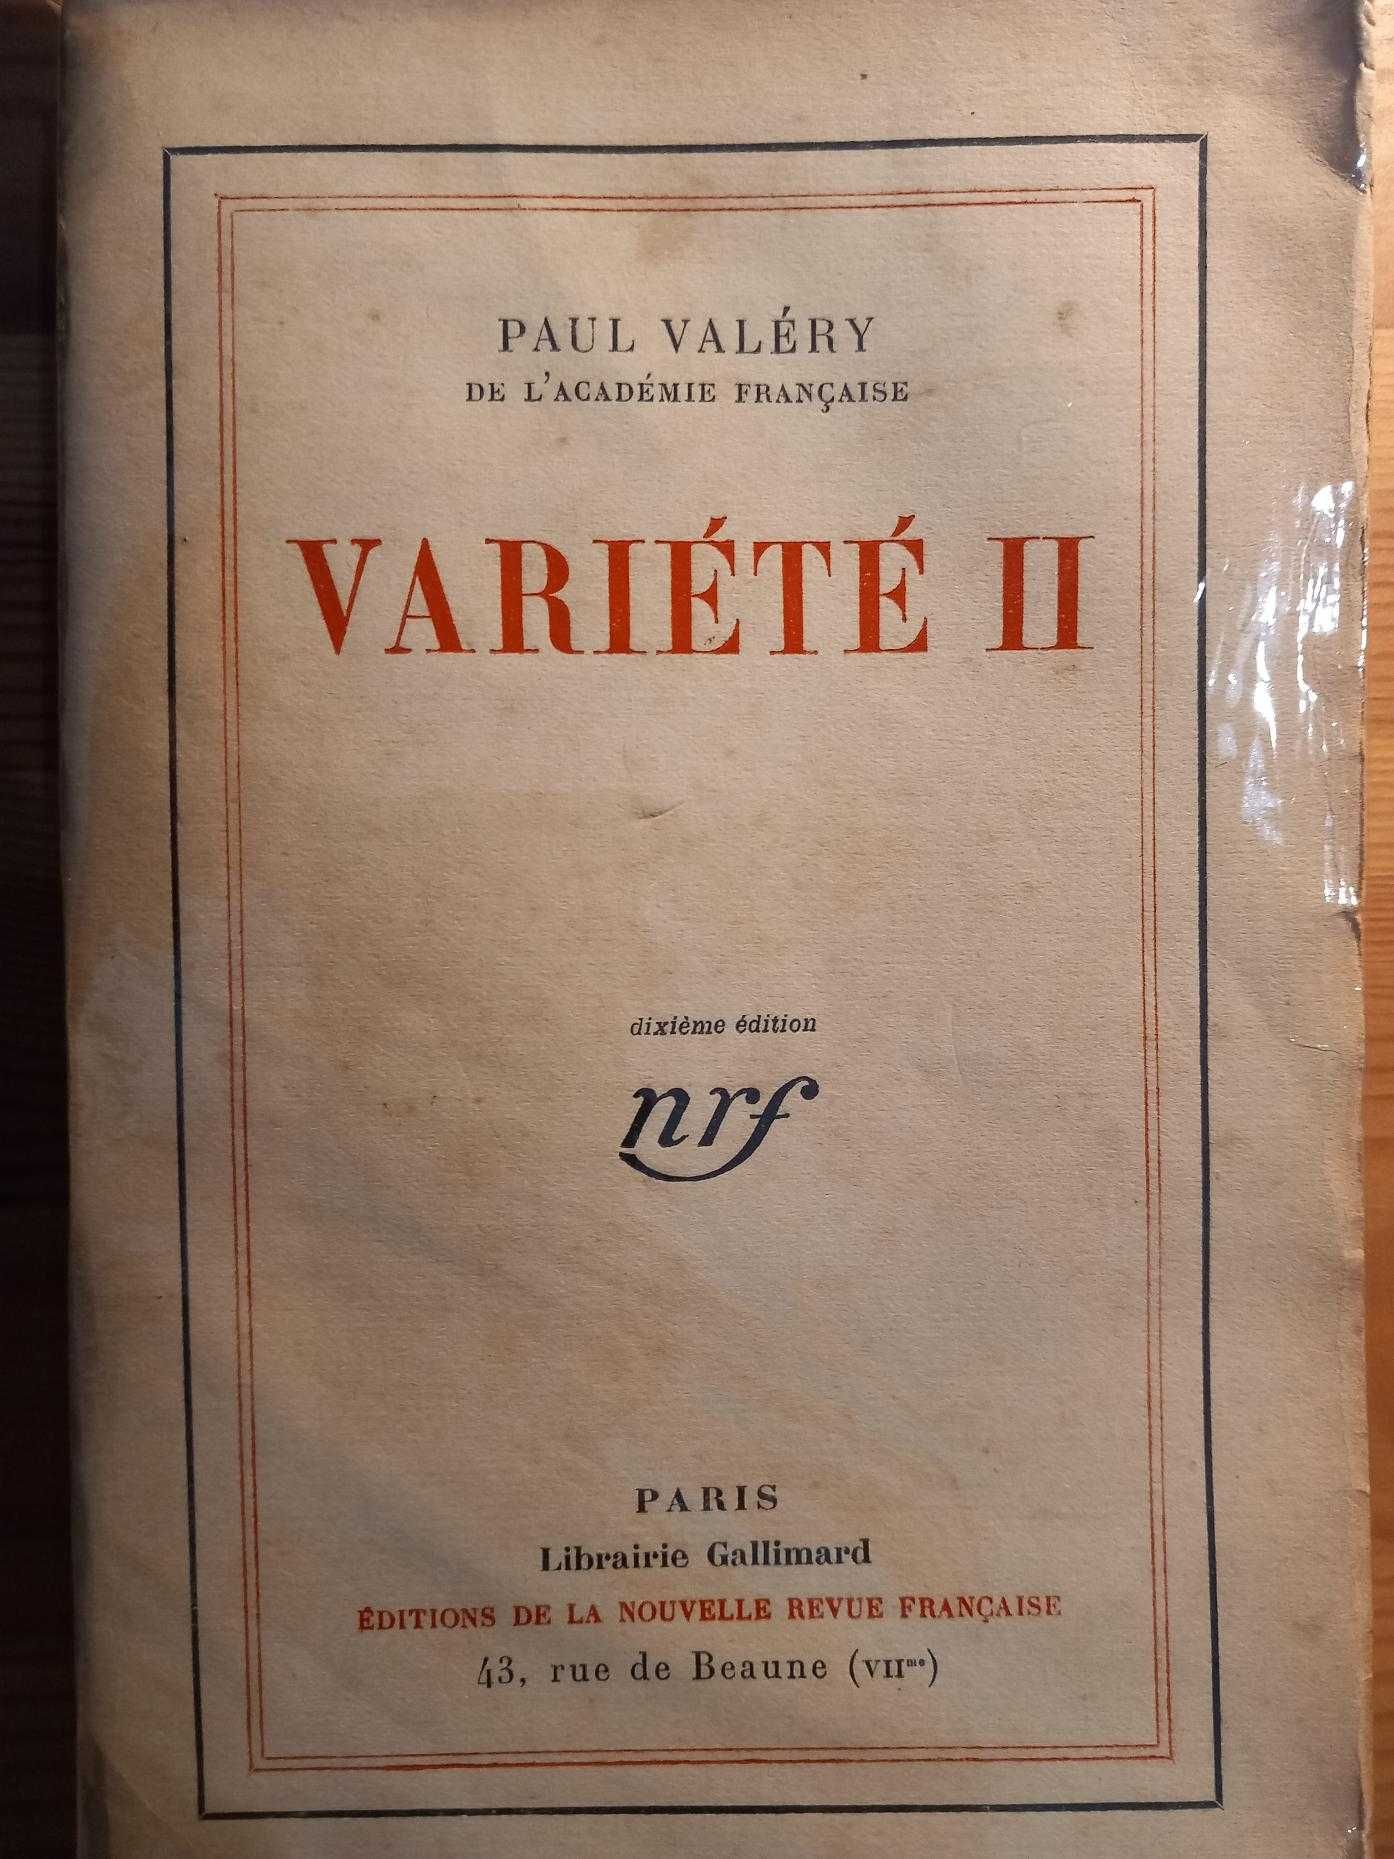 Paul Valéry, Variété II